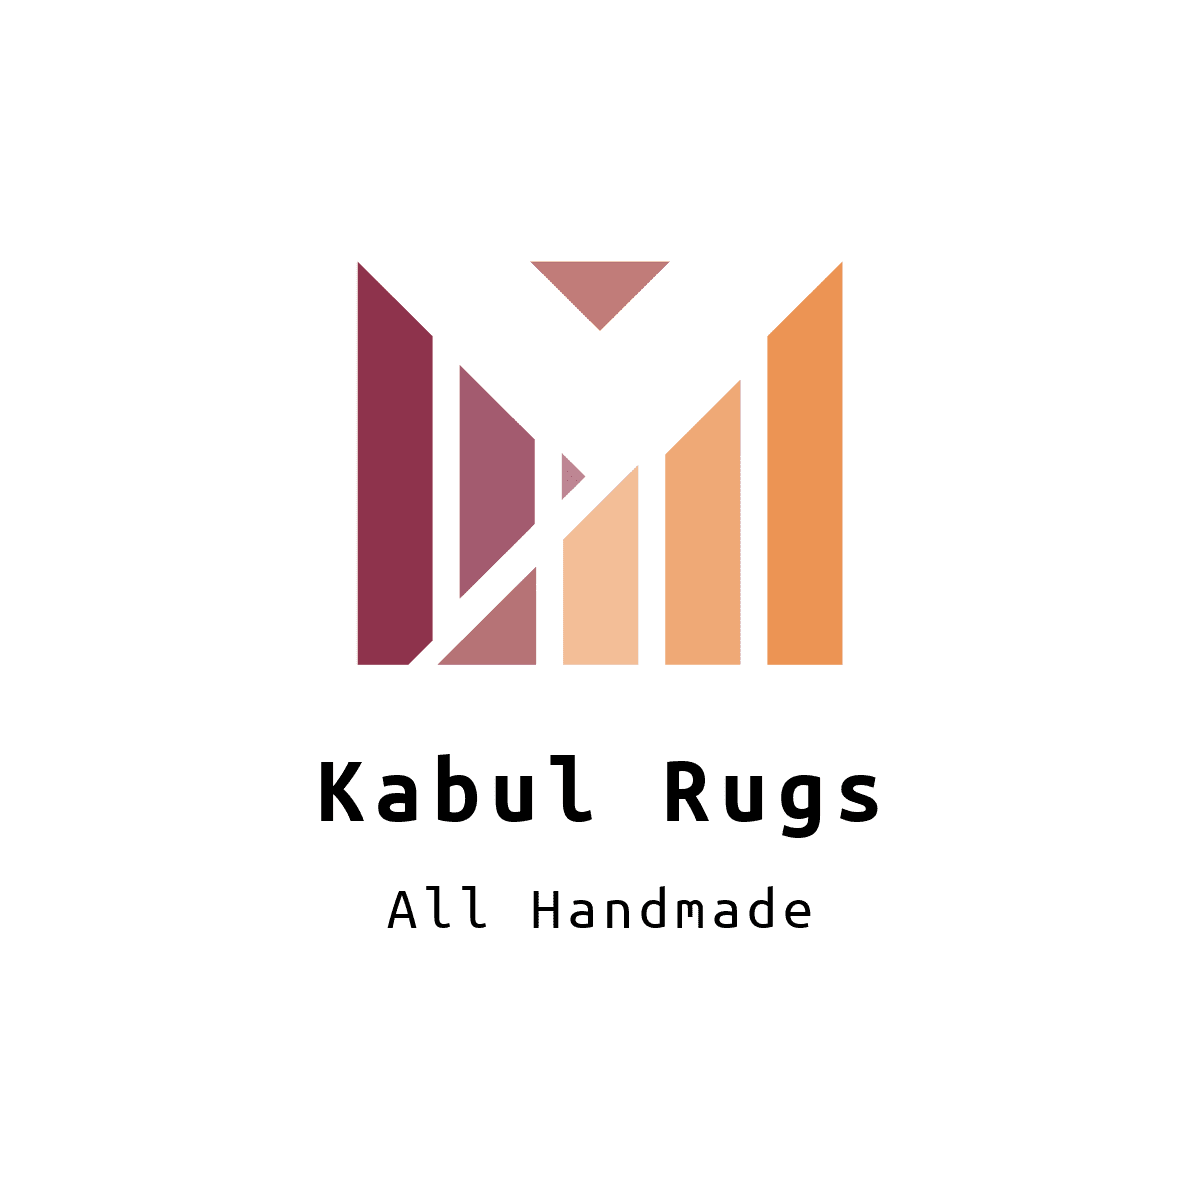 Kabul Rugs